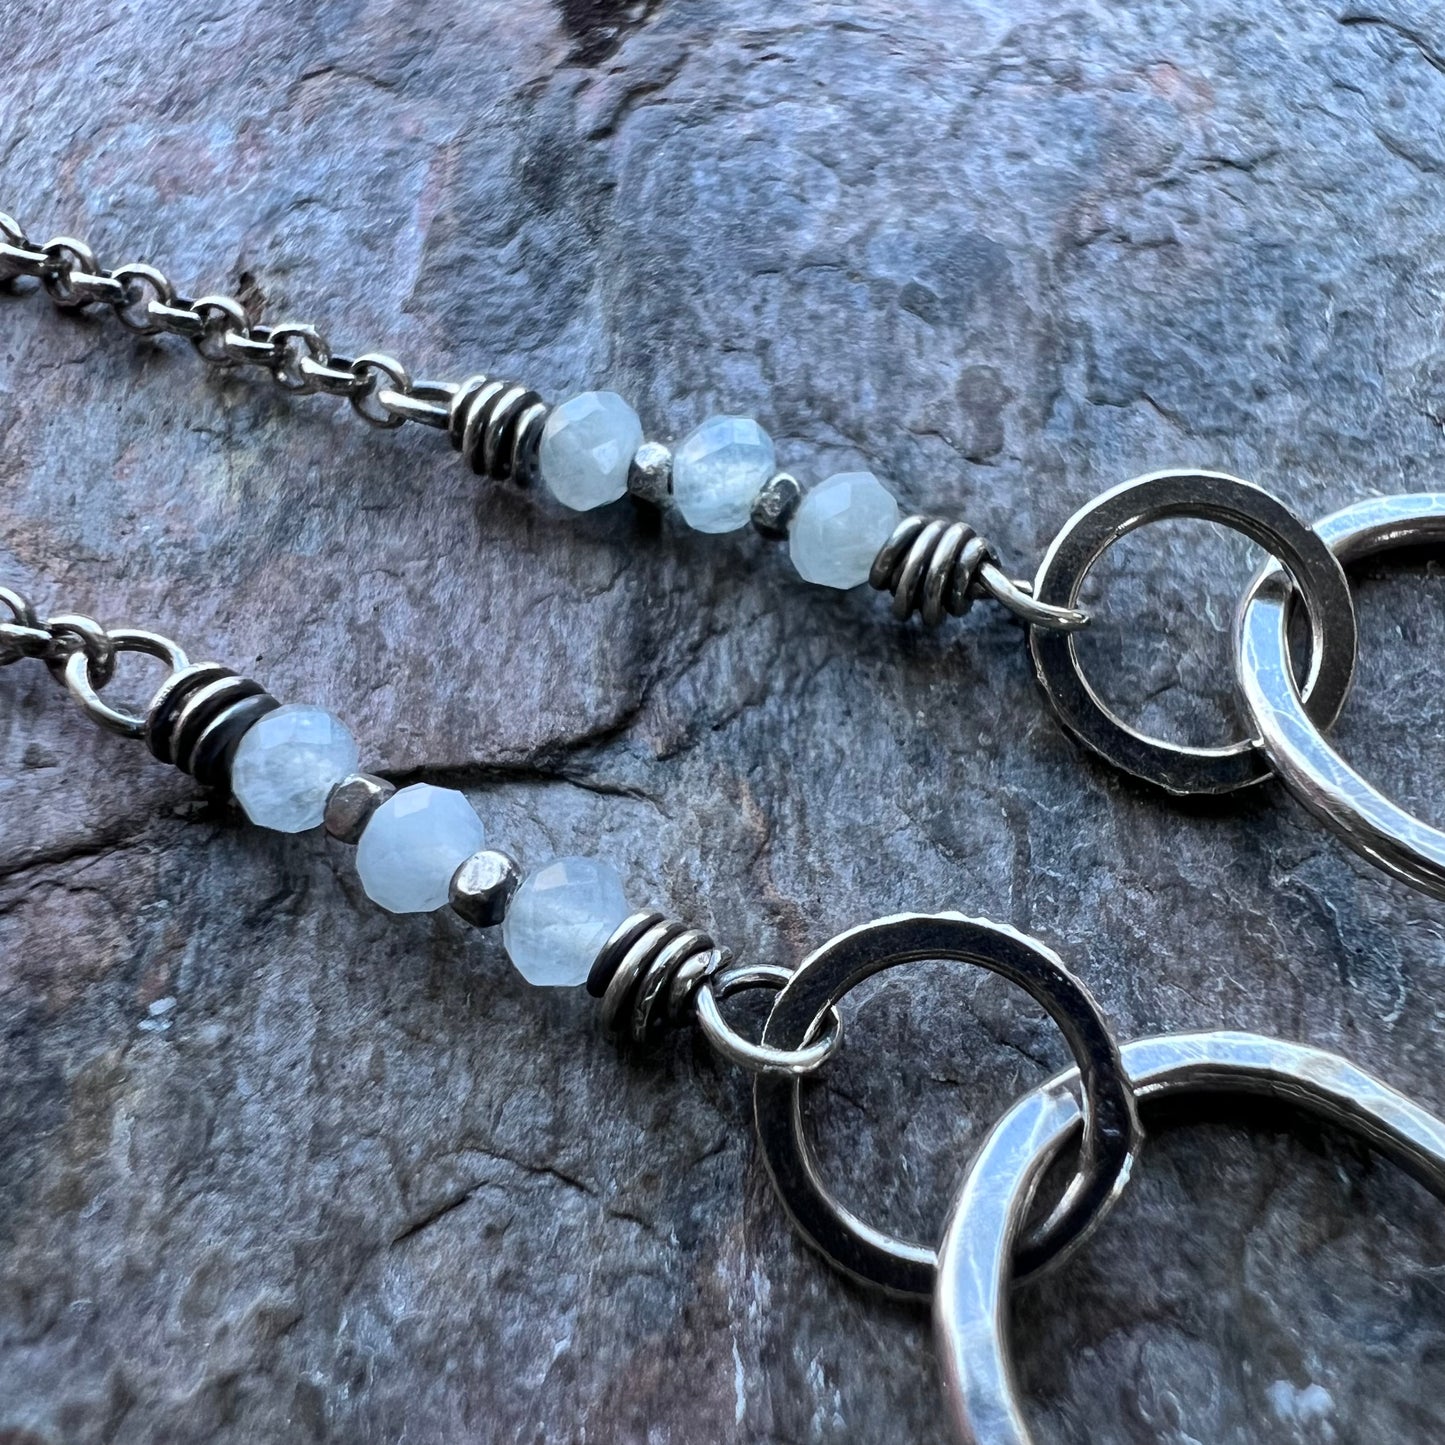 Aquamarine Sterling Silver Necklace - Genuine Aquamarine Rondelles and Hammered Sterling Silver Necklace